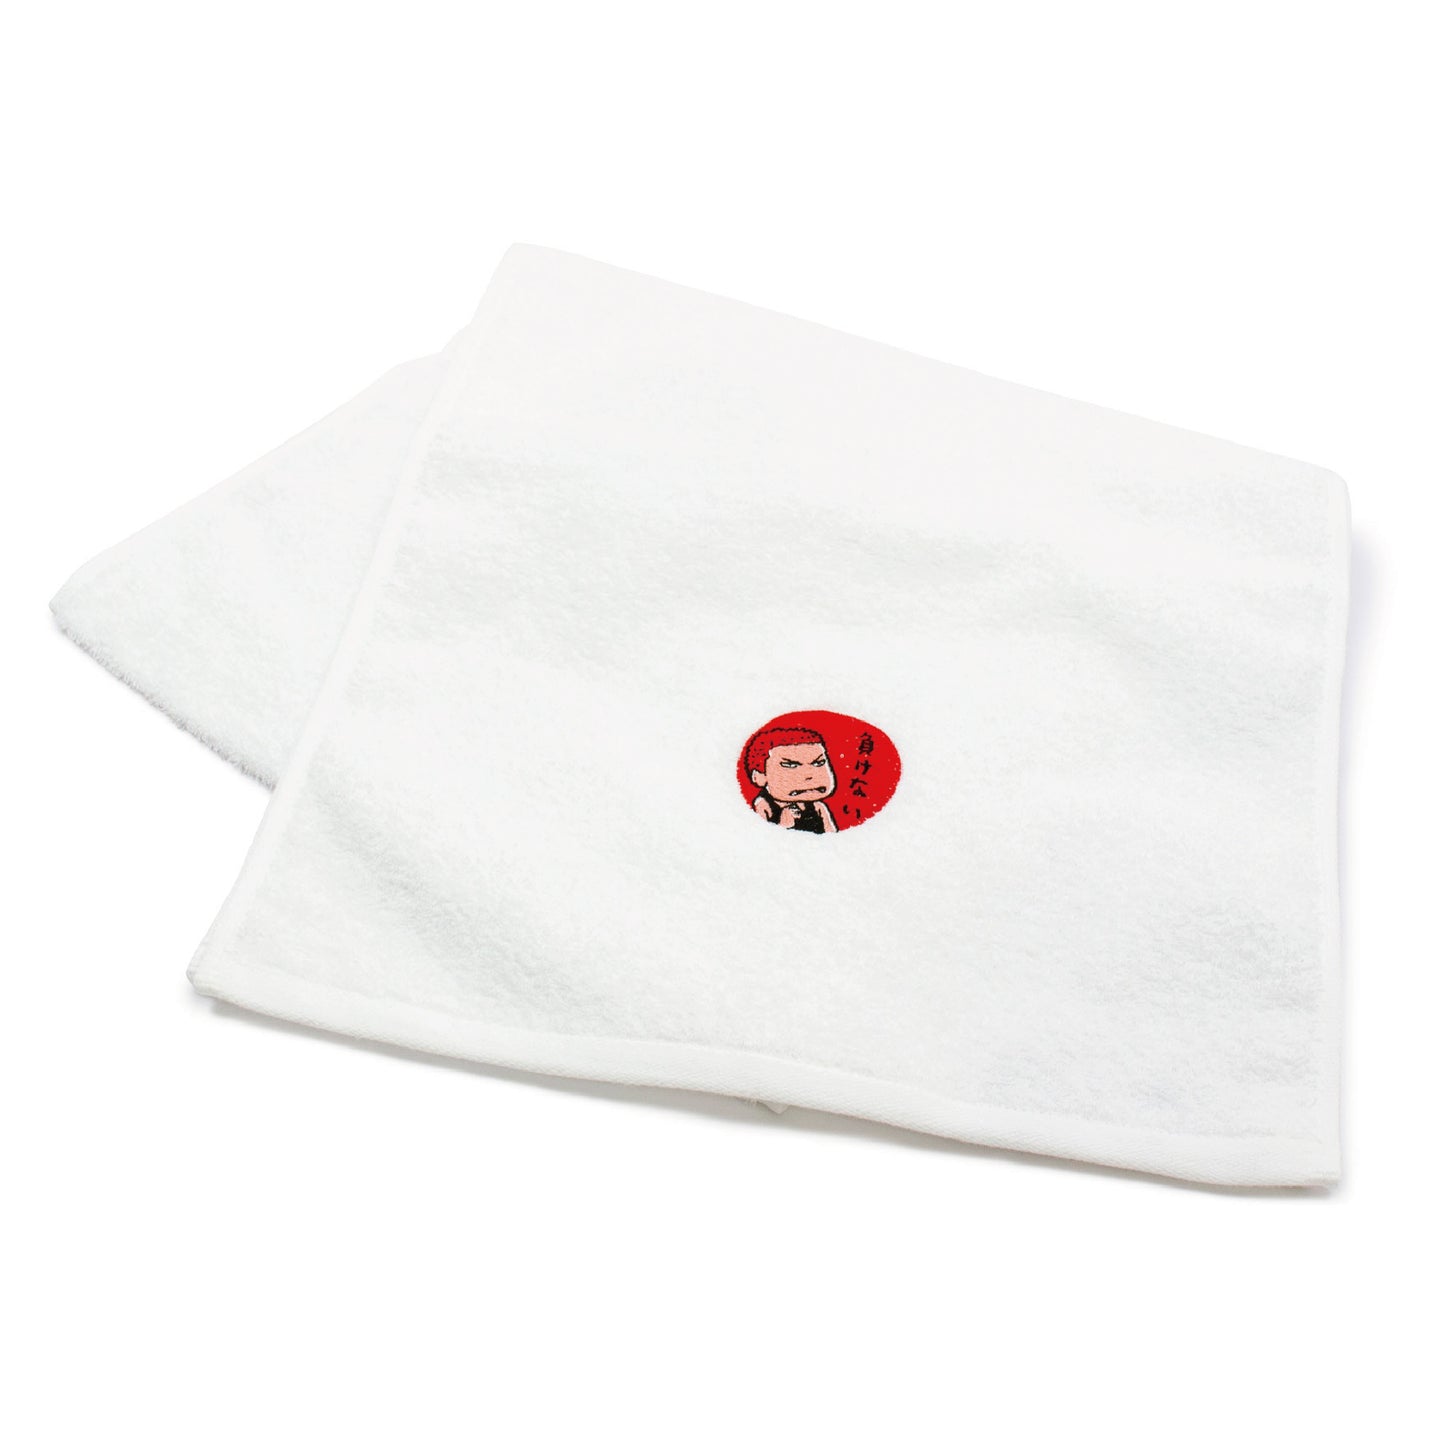 HANAMICHI embroidered towel